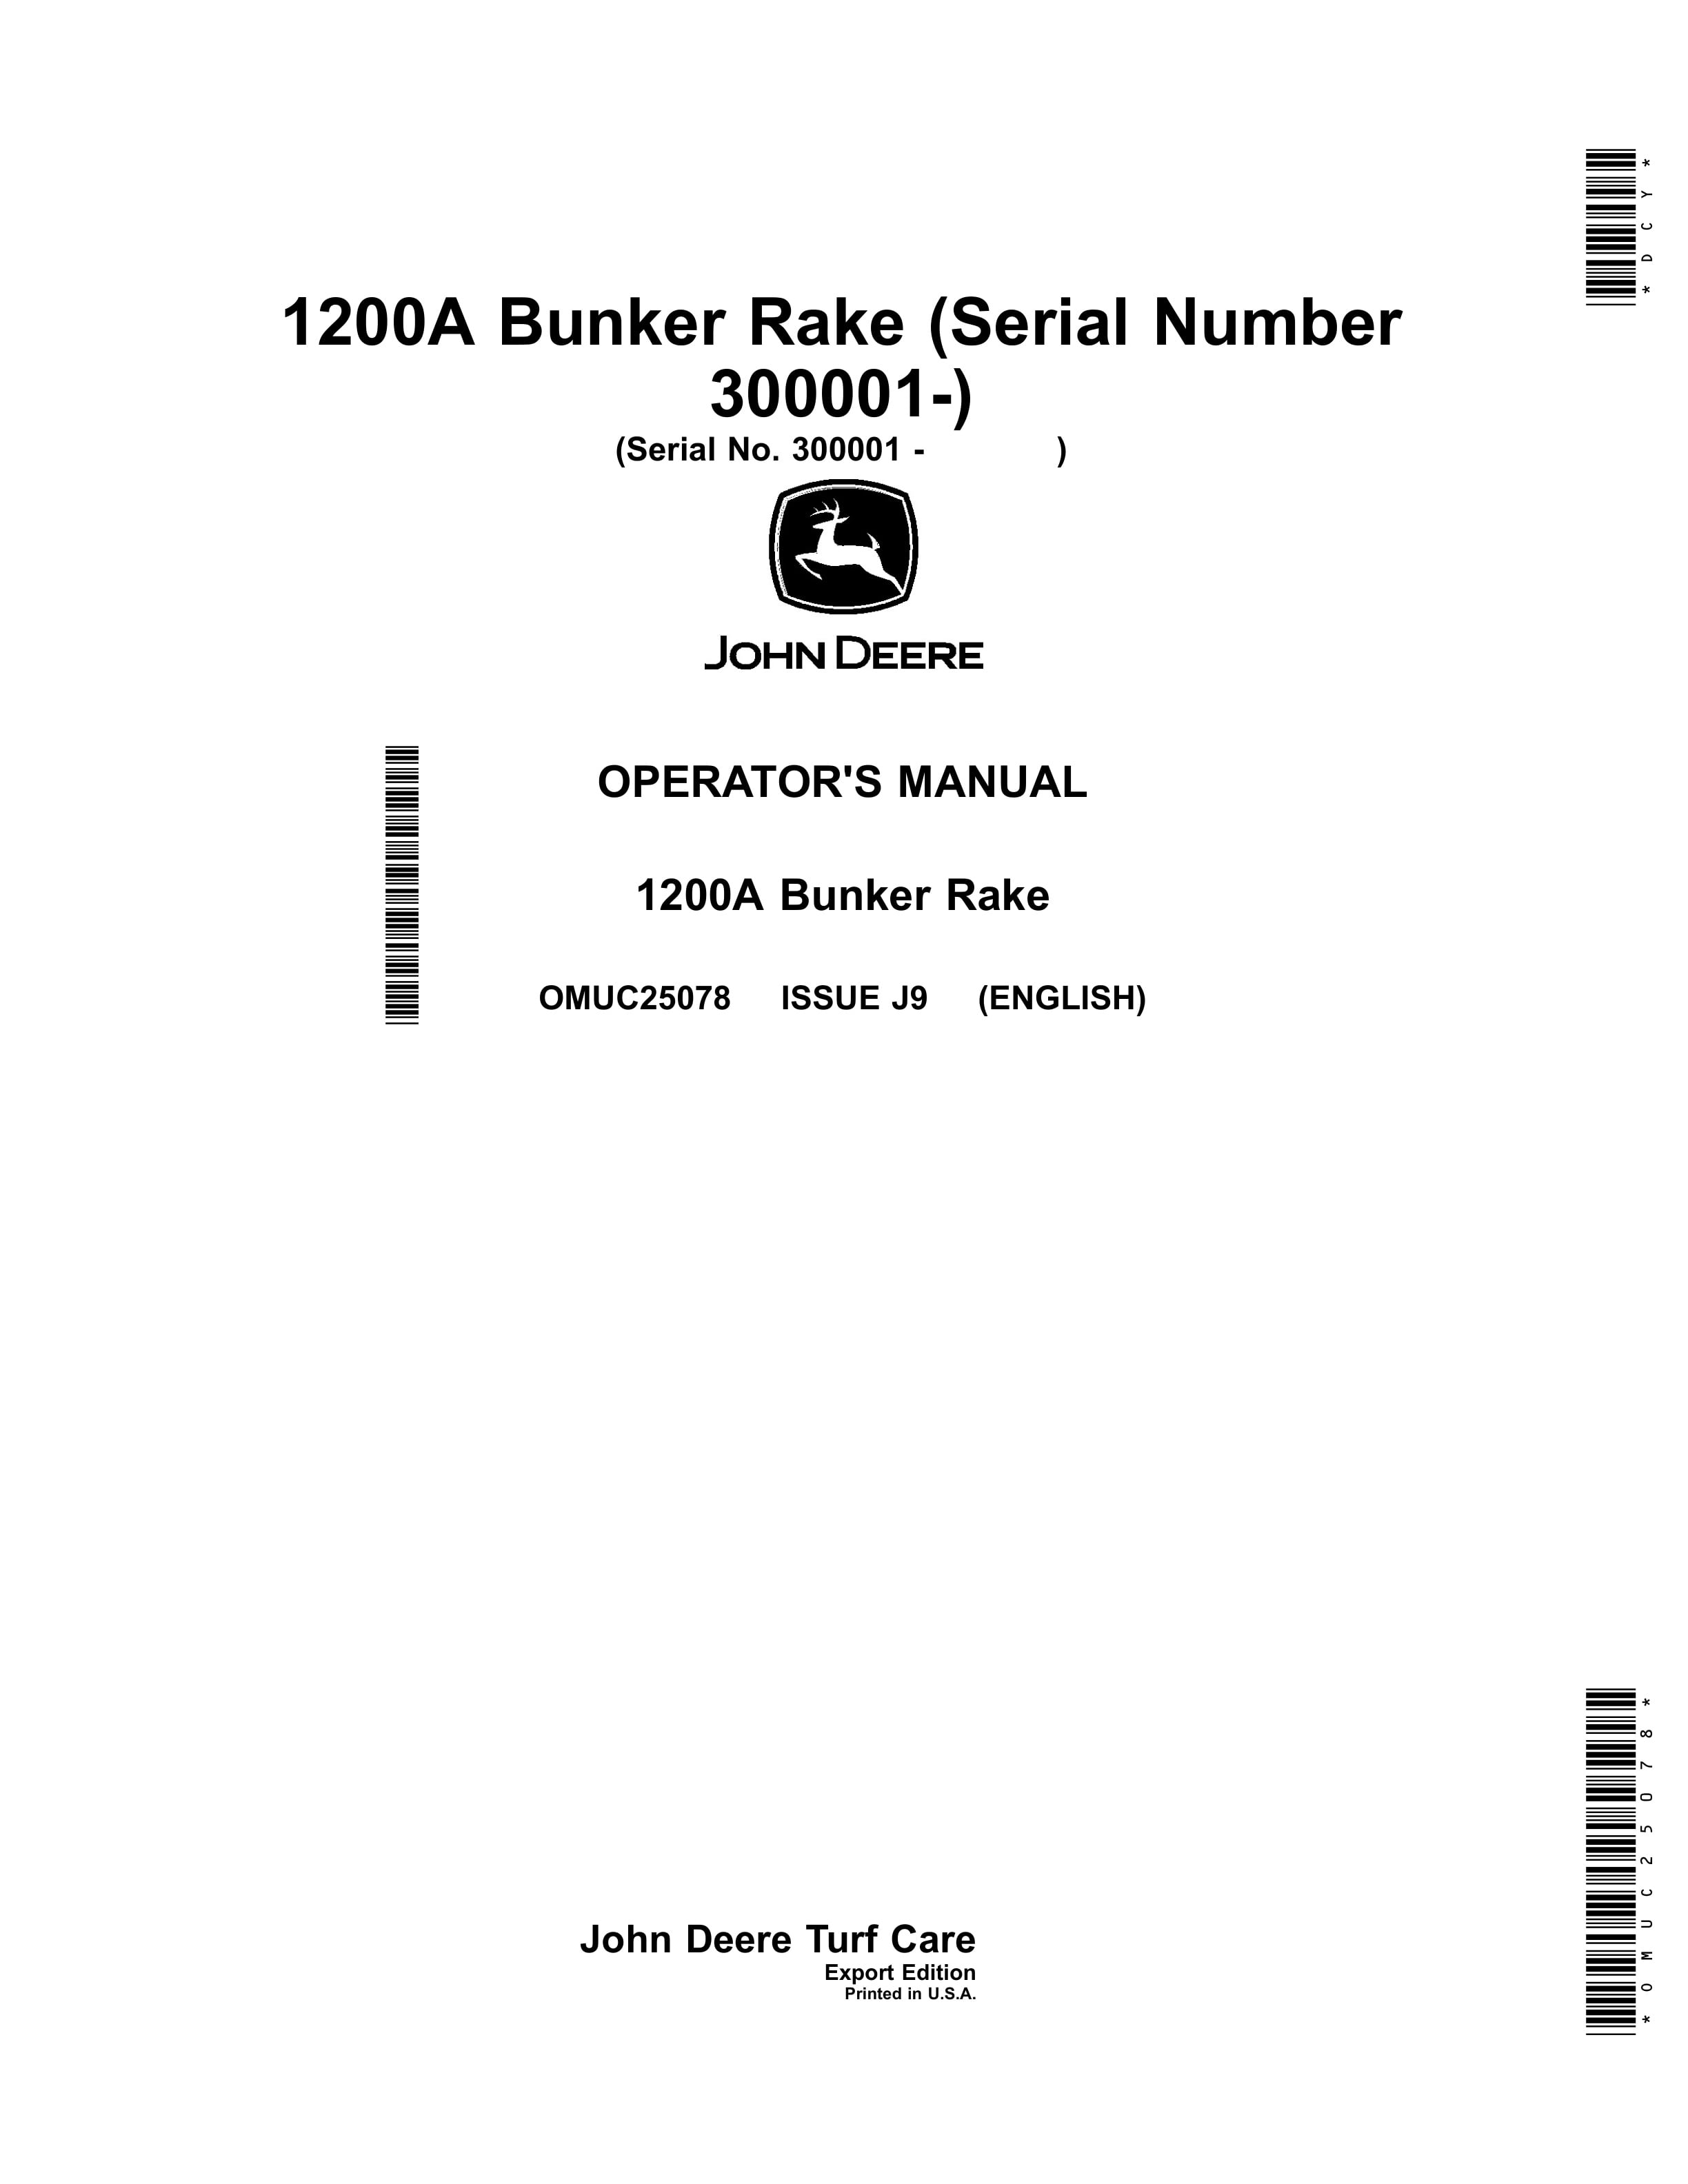 John Deere 1200A Bunker Rakes Operator Manual OMUC25078 1